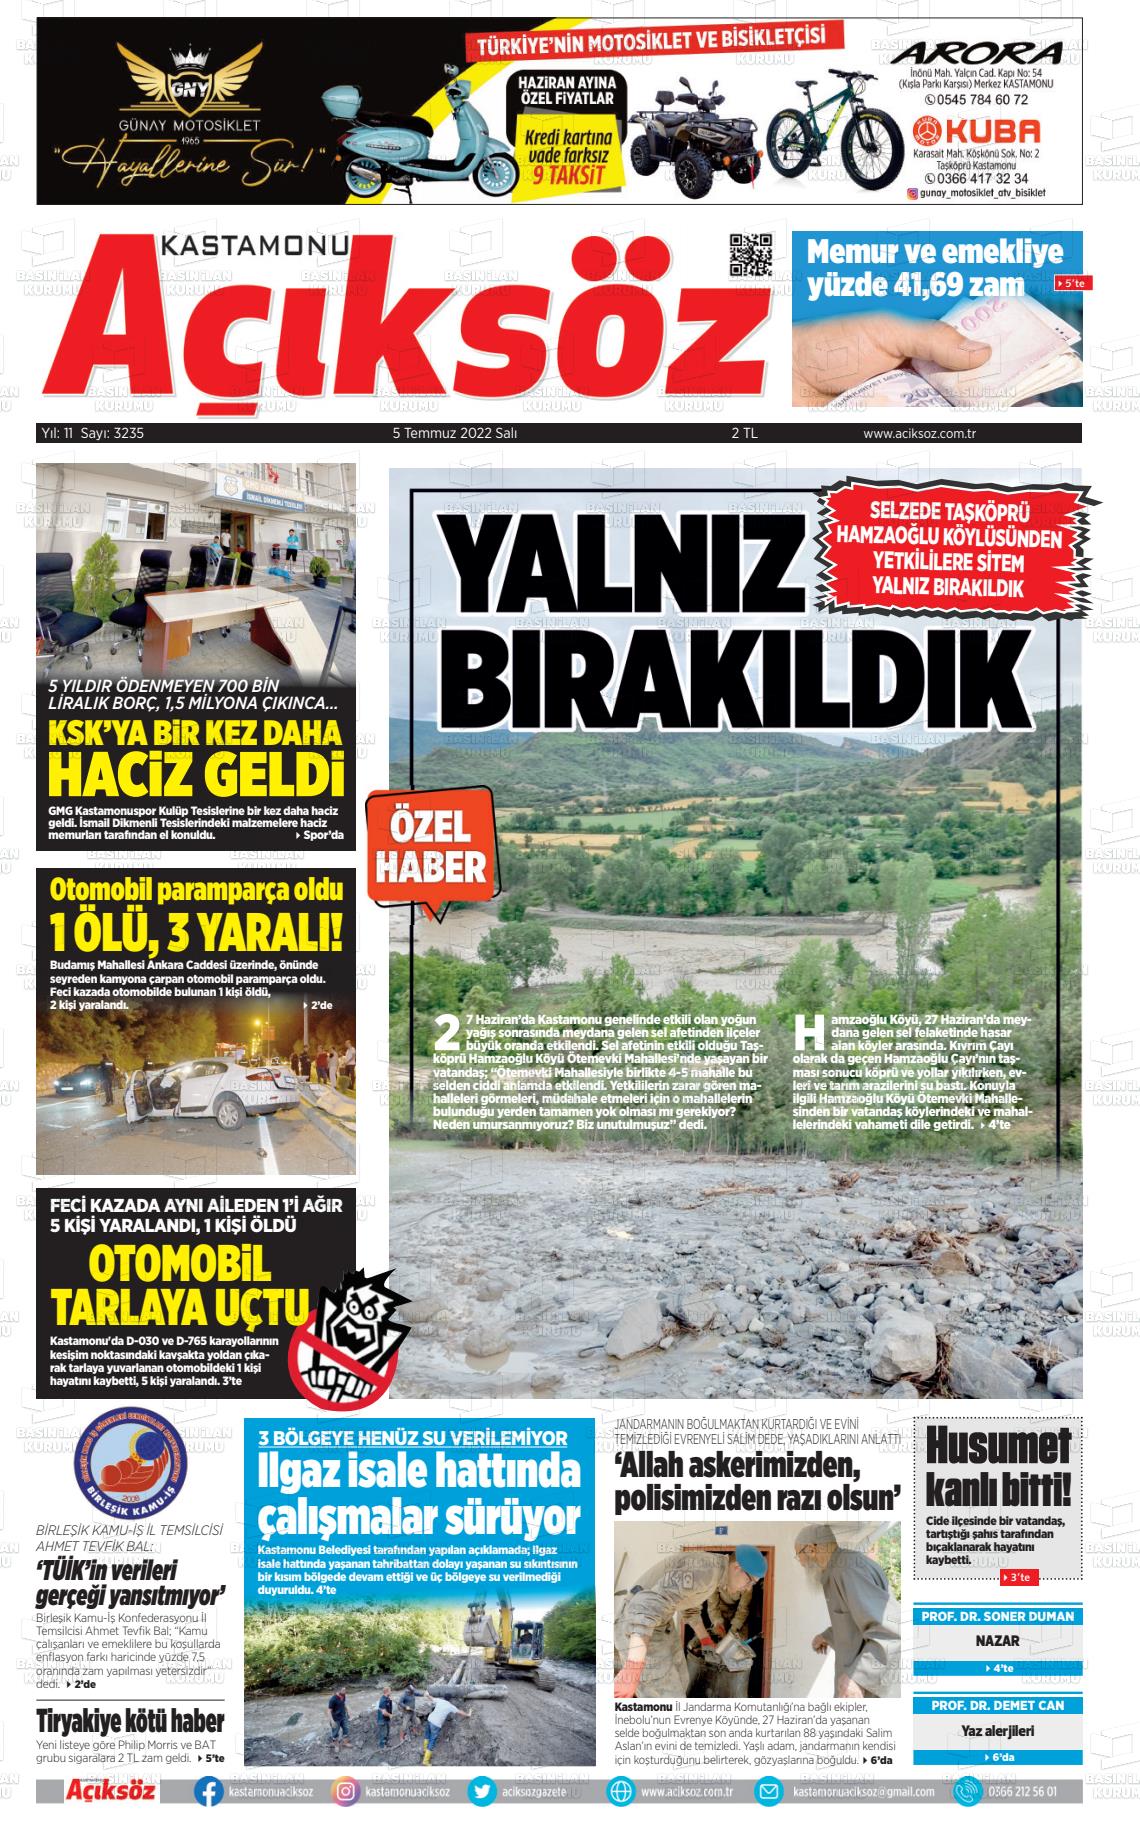 05 Temmuz 2022 KASTAMONU AÇIKSÖZ GAZETESİ Gazete Manşeti